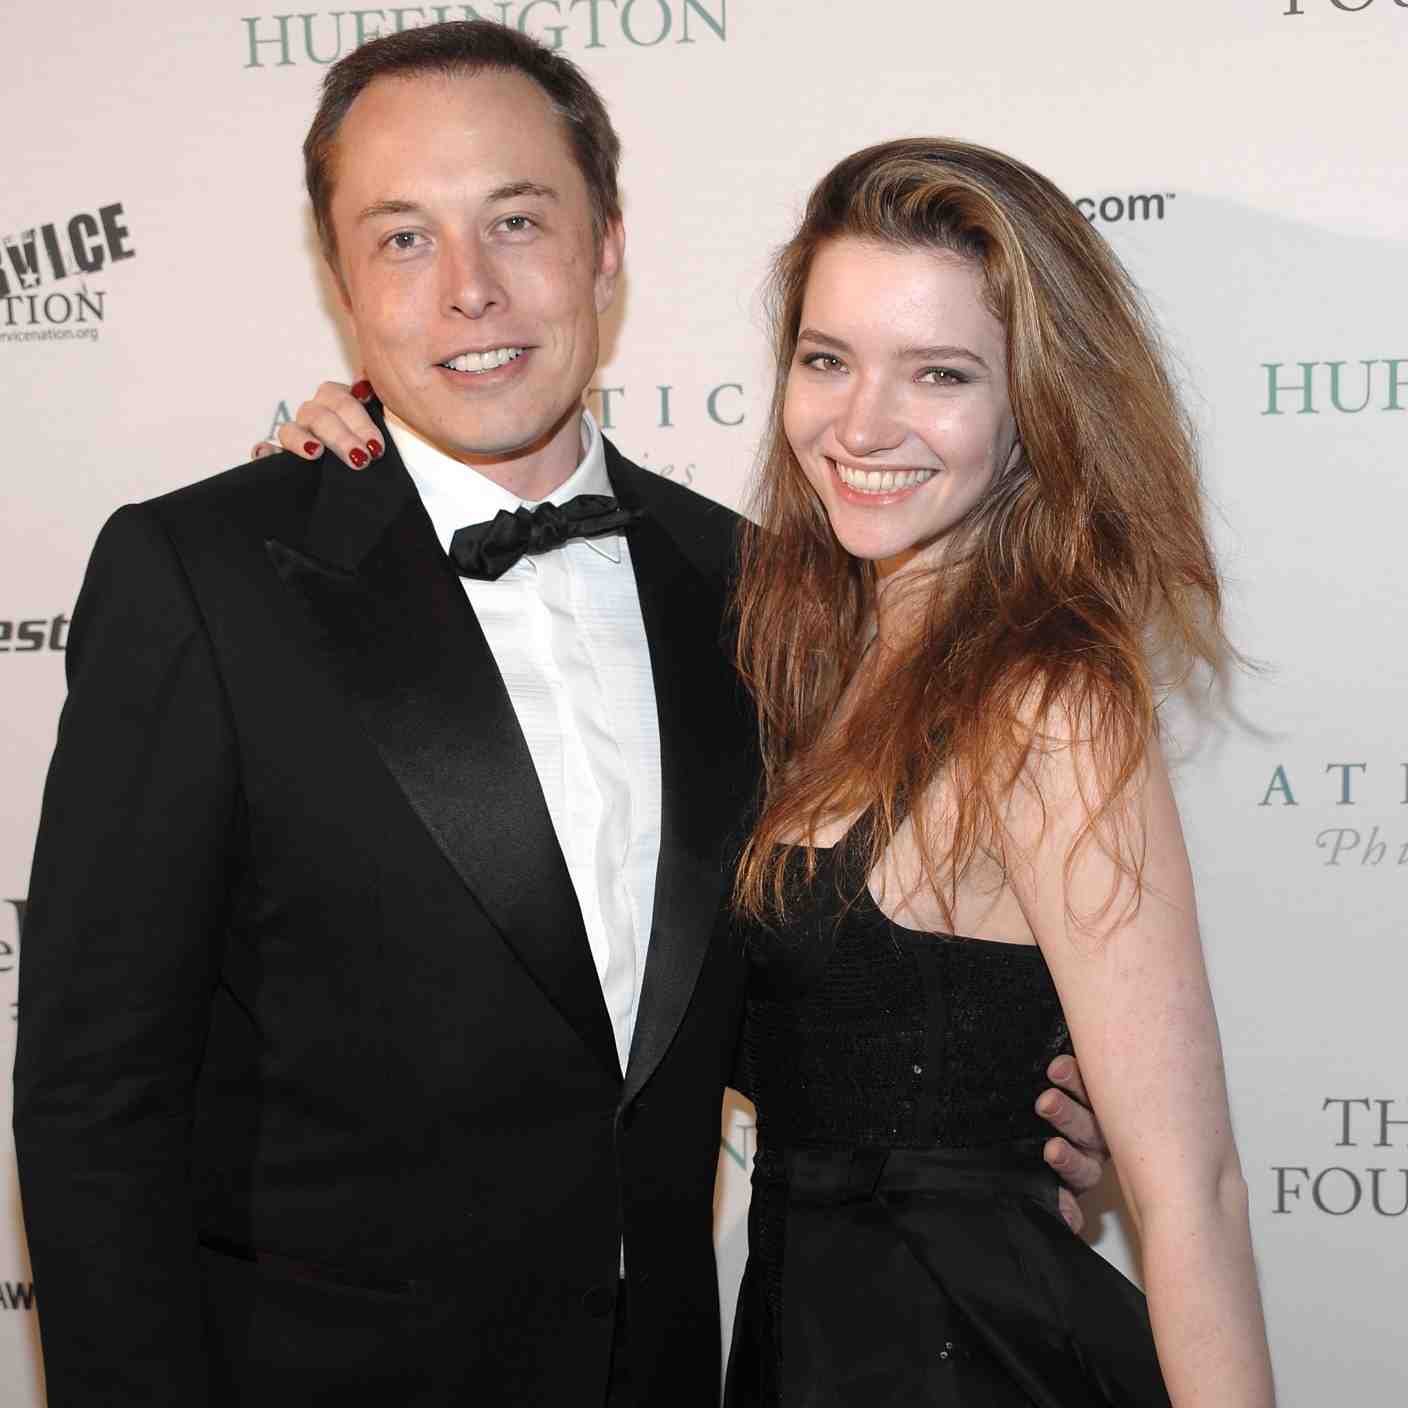 Was Elon Musk rich growing up?